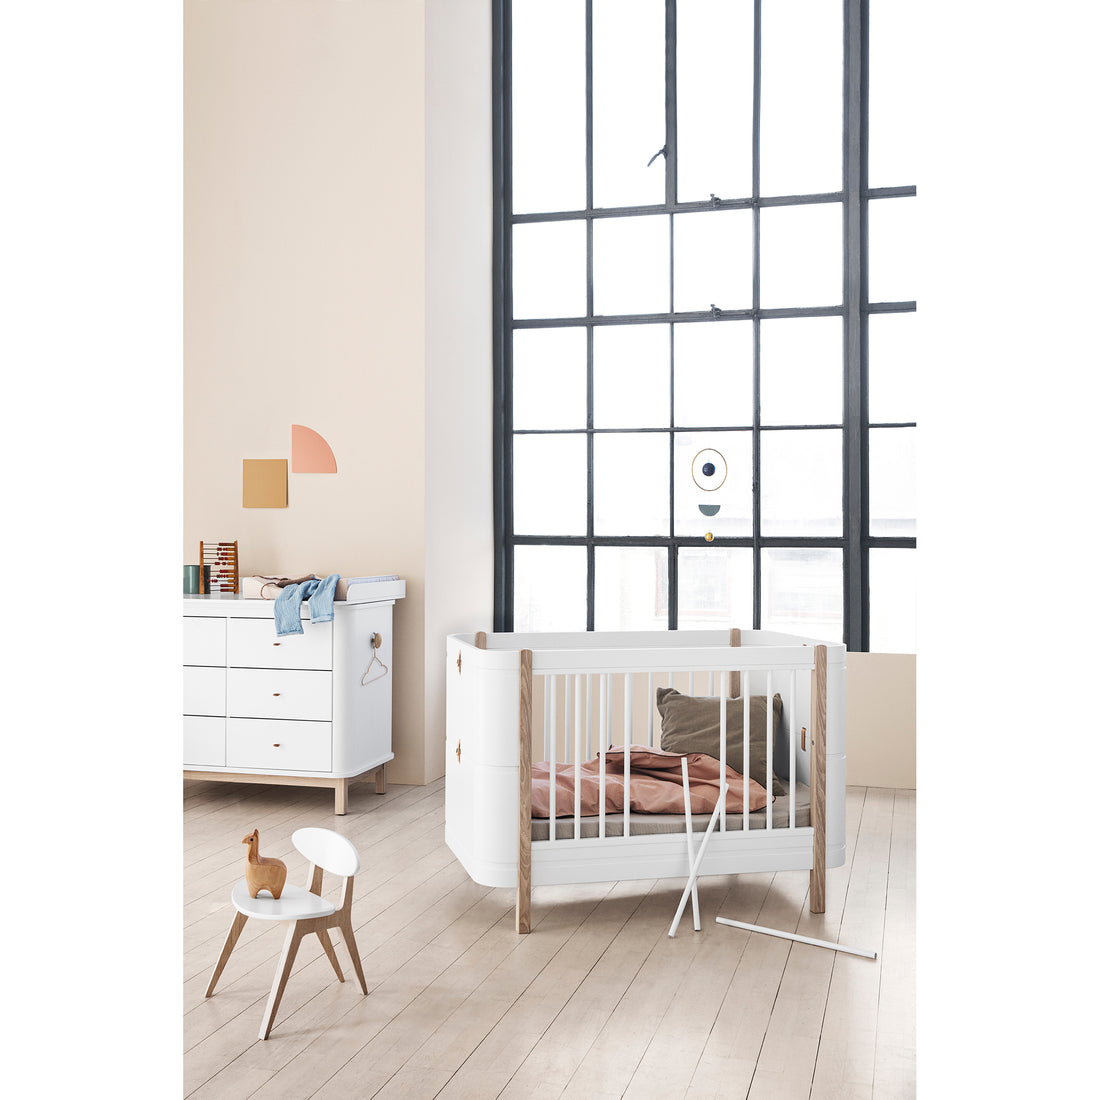 Oliver Furniture Wood PingPong Chair White/Oak